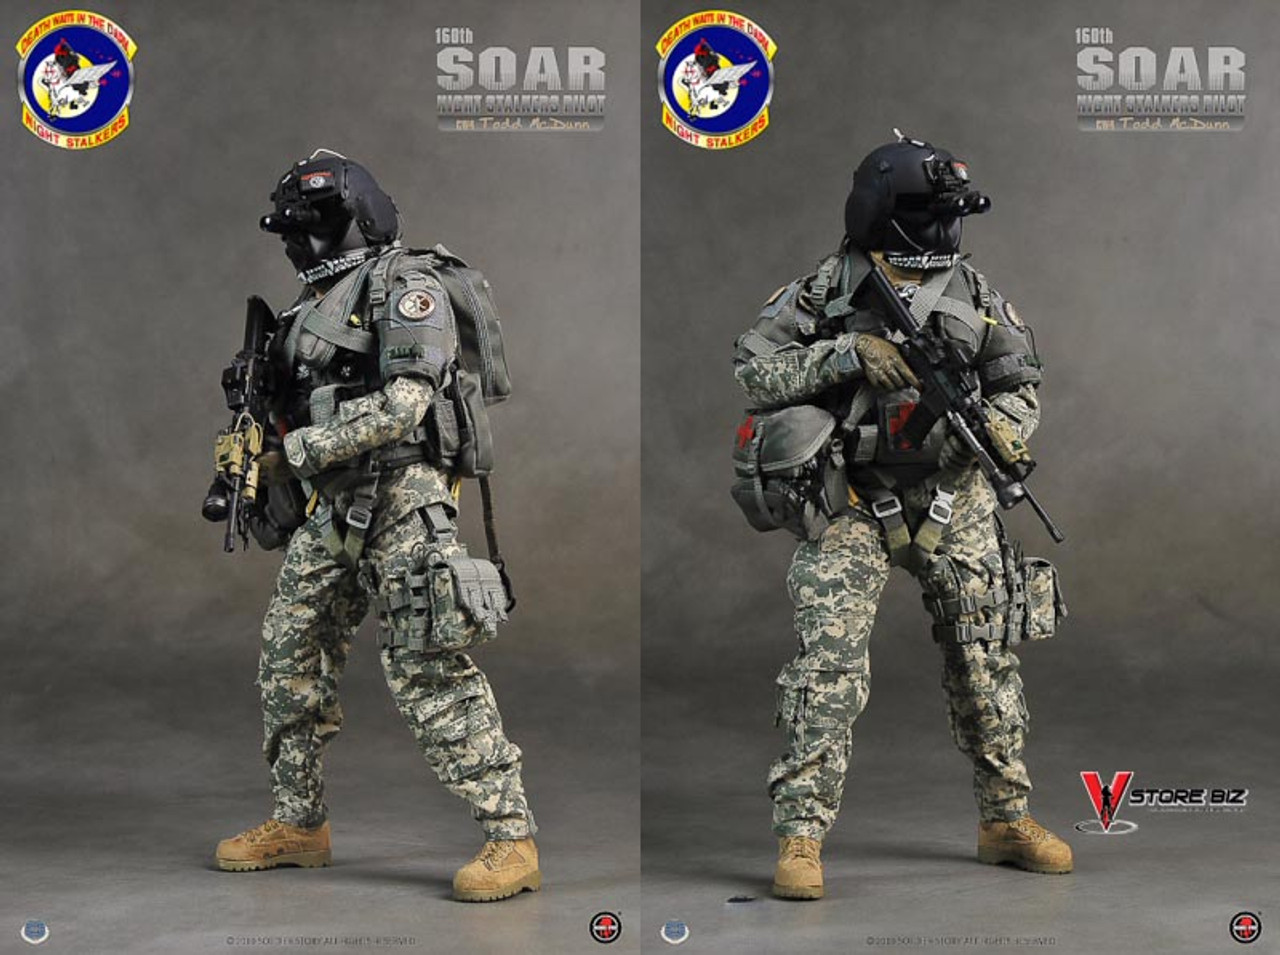 The U.S Army's 160th SOAR フィギュア